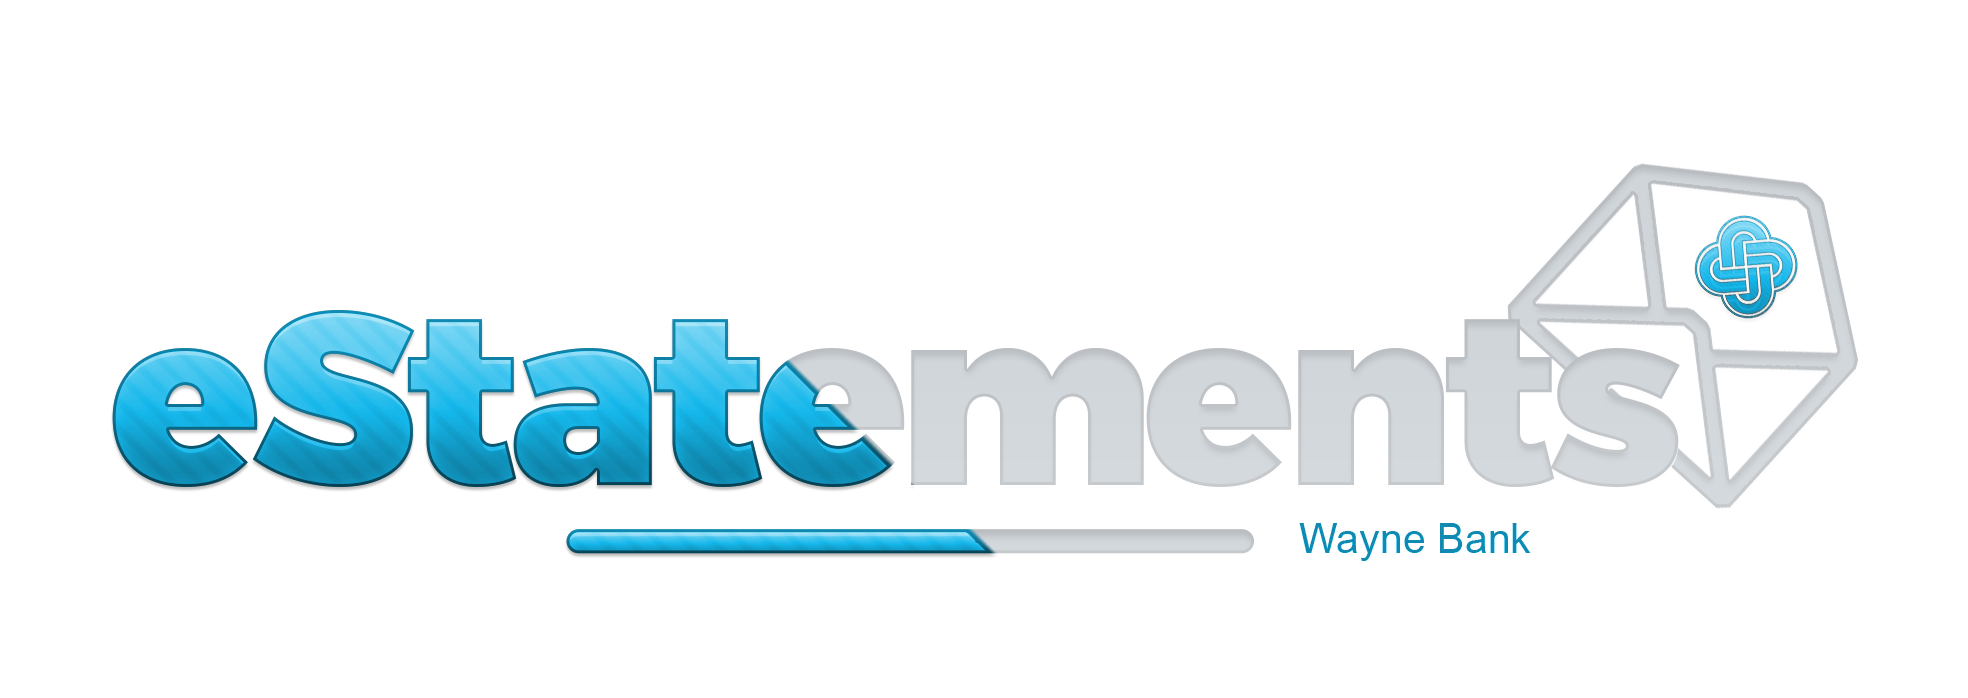 estatement logo